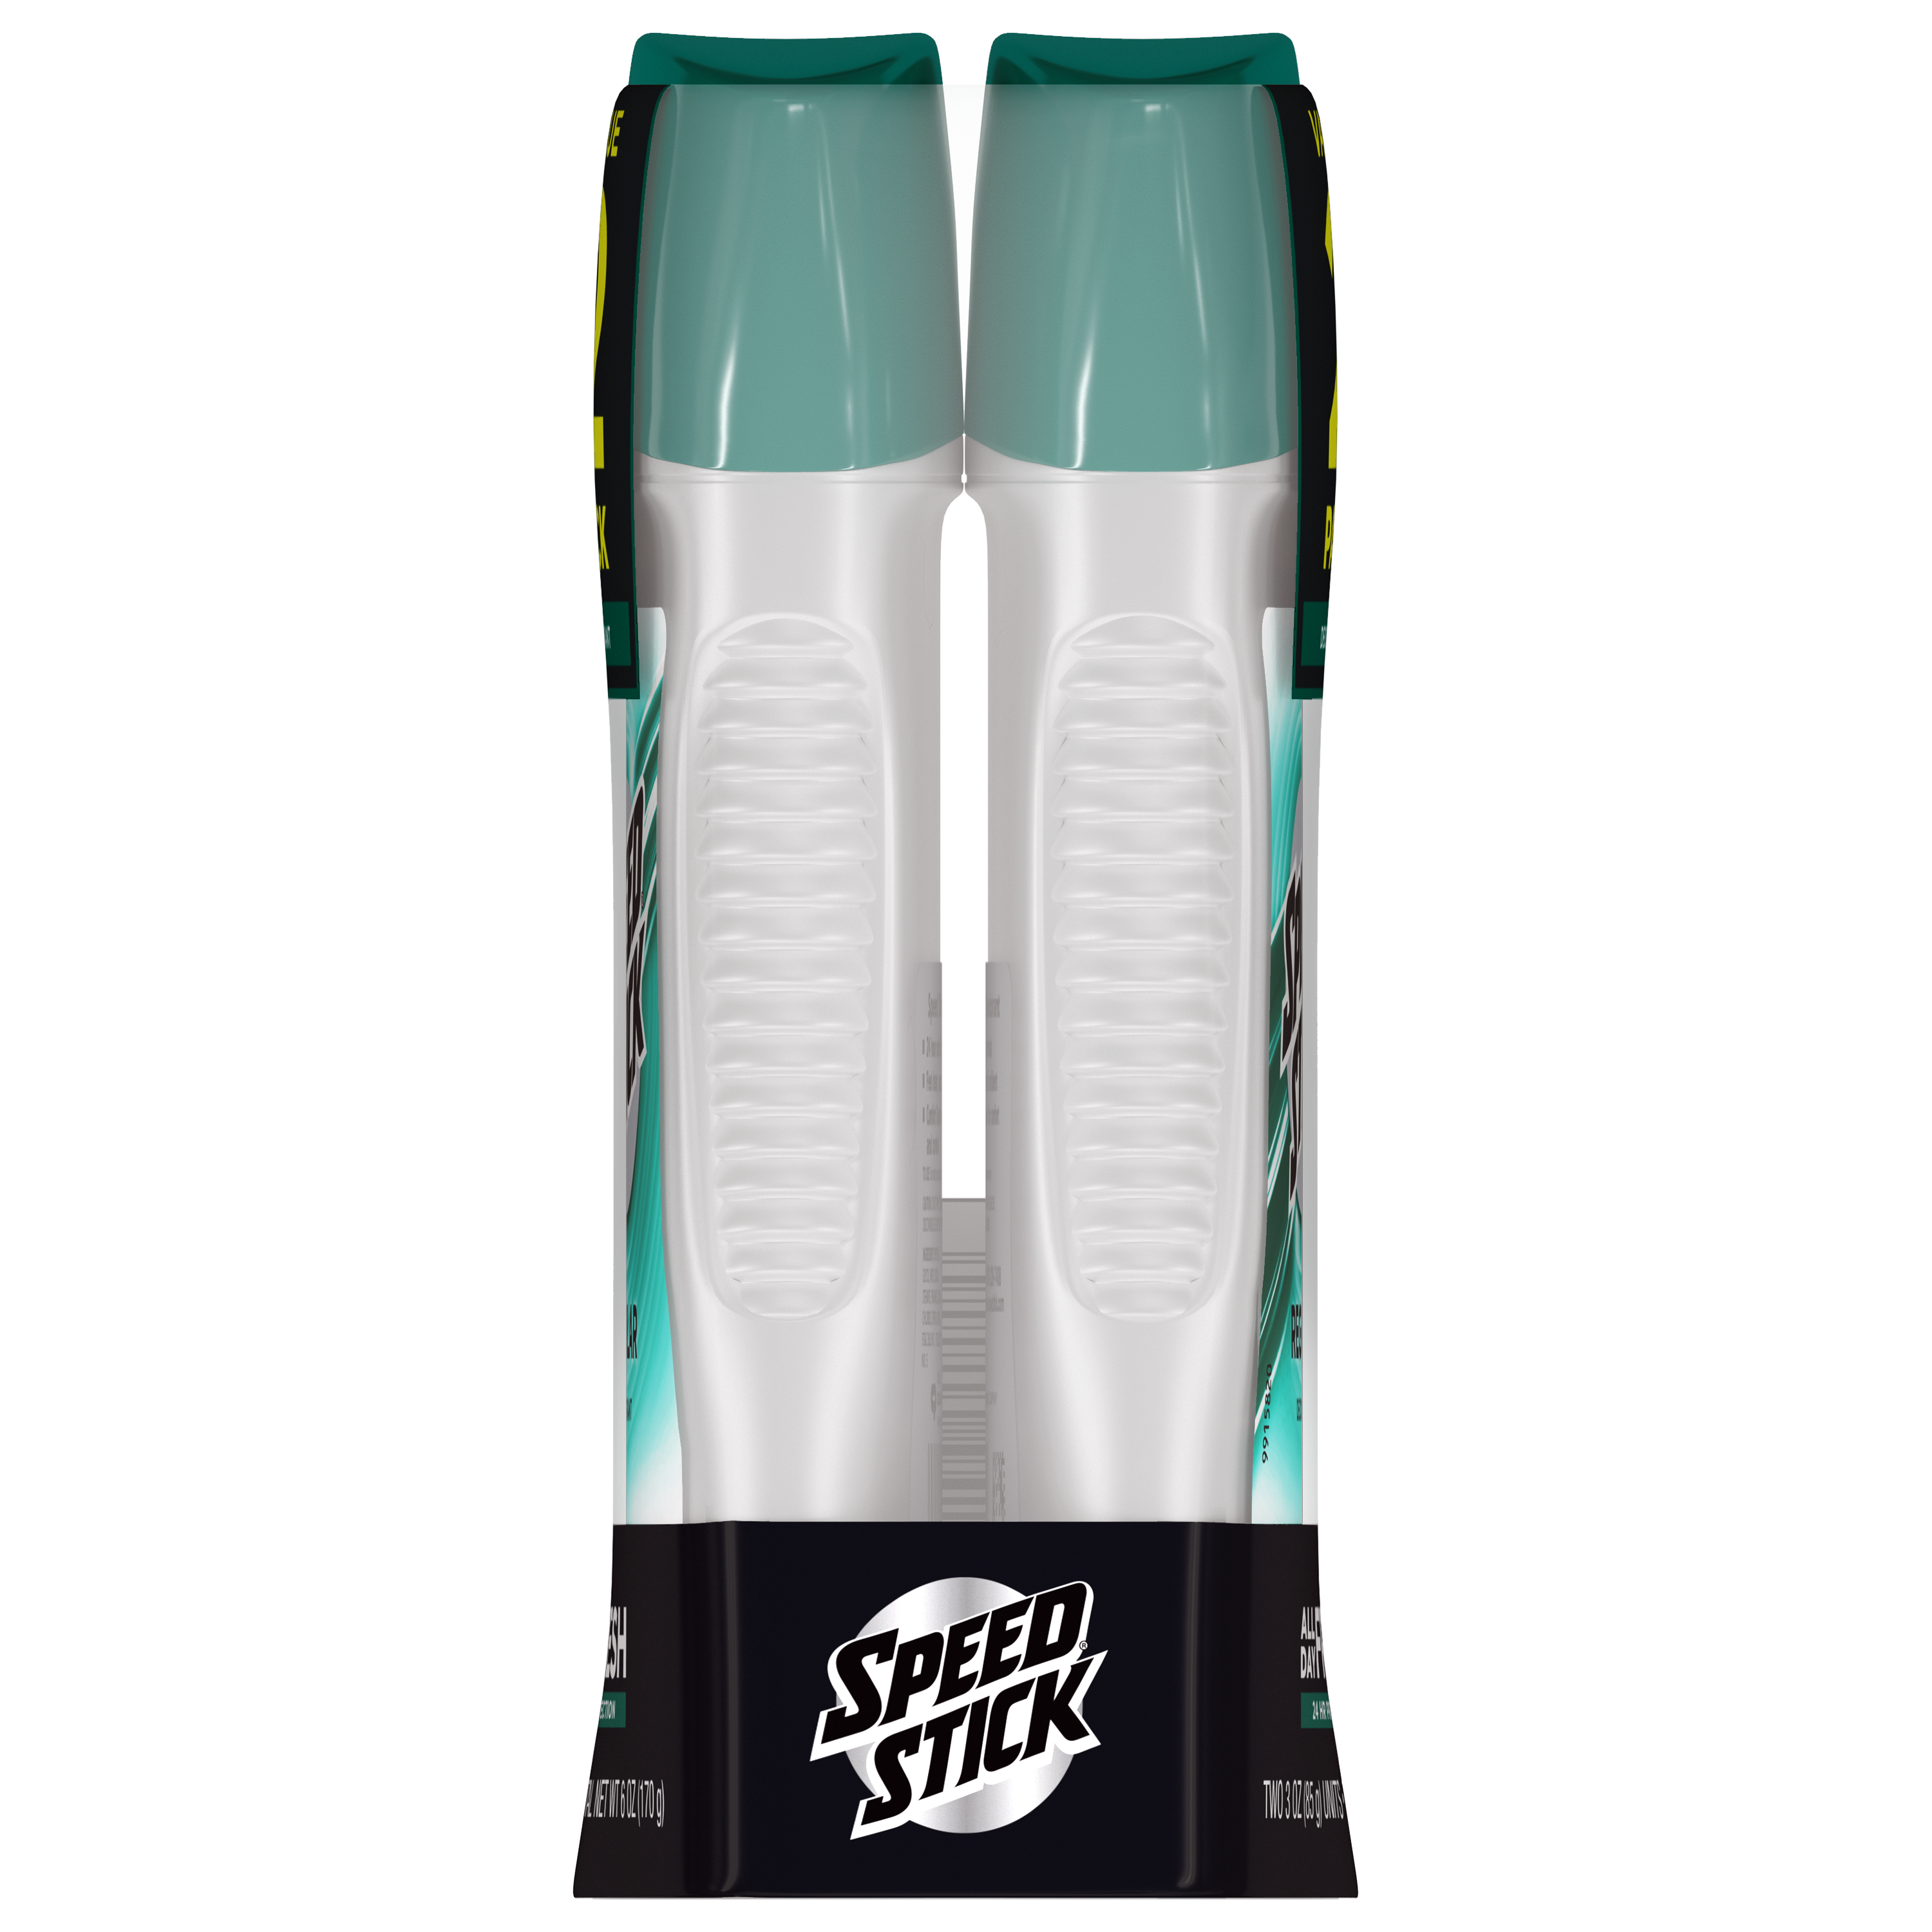 Speed Stick Men's Deodorant, Regular - 3 Ounce Twin Pack - image 5 of 5